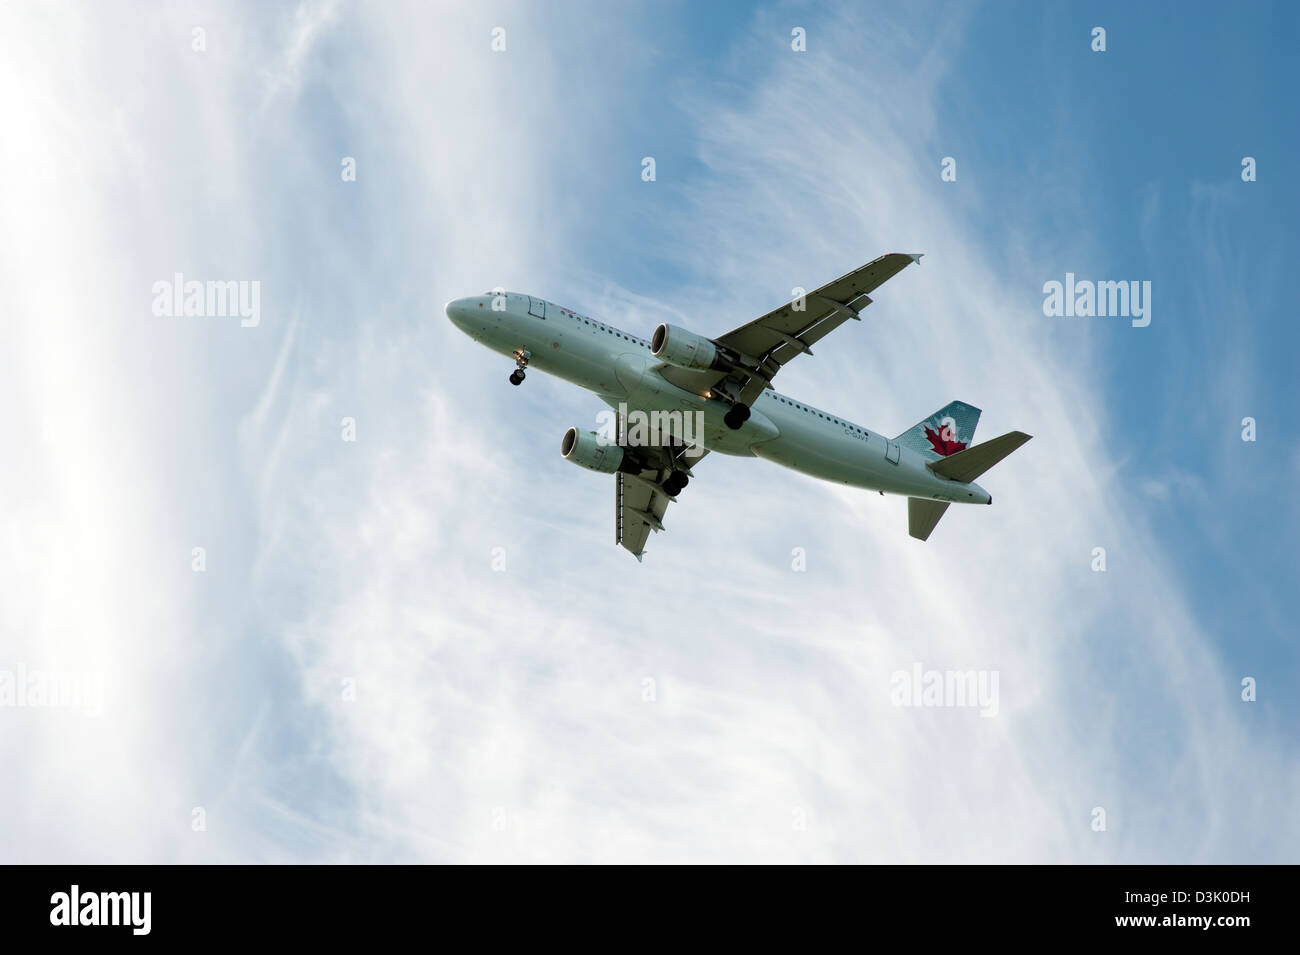 Un Air Canada aereo con landing gear down pronti a sbarcare a Vancouver in Canada Foto Stock